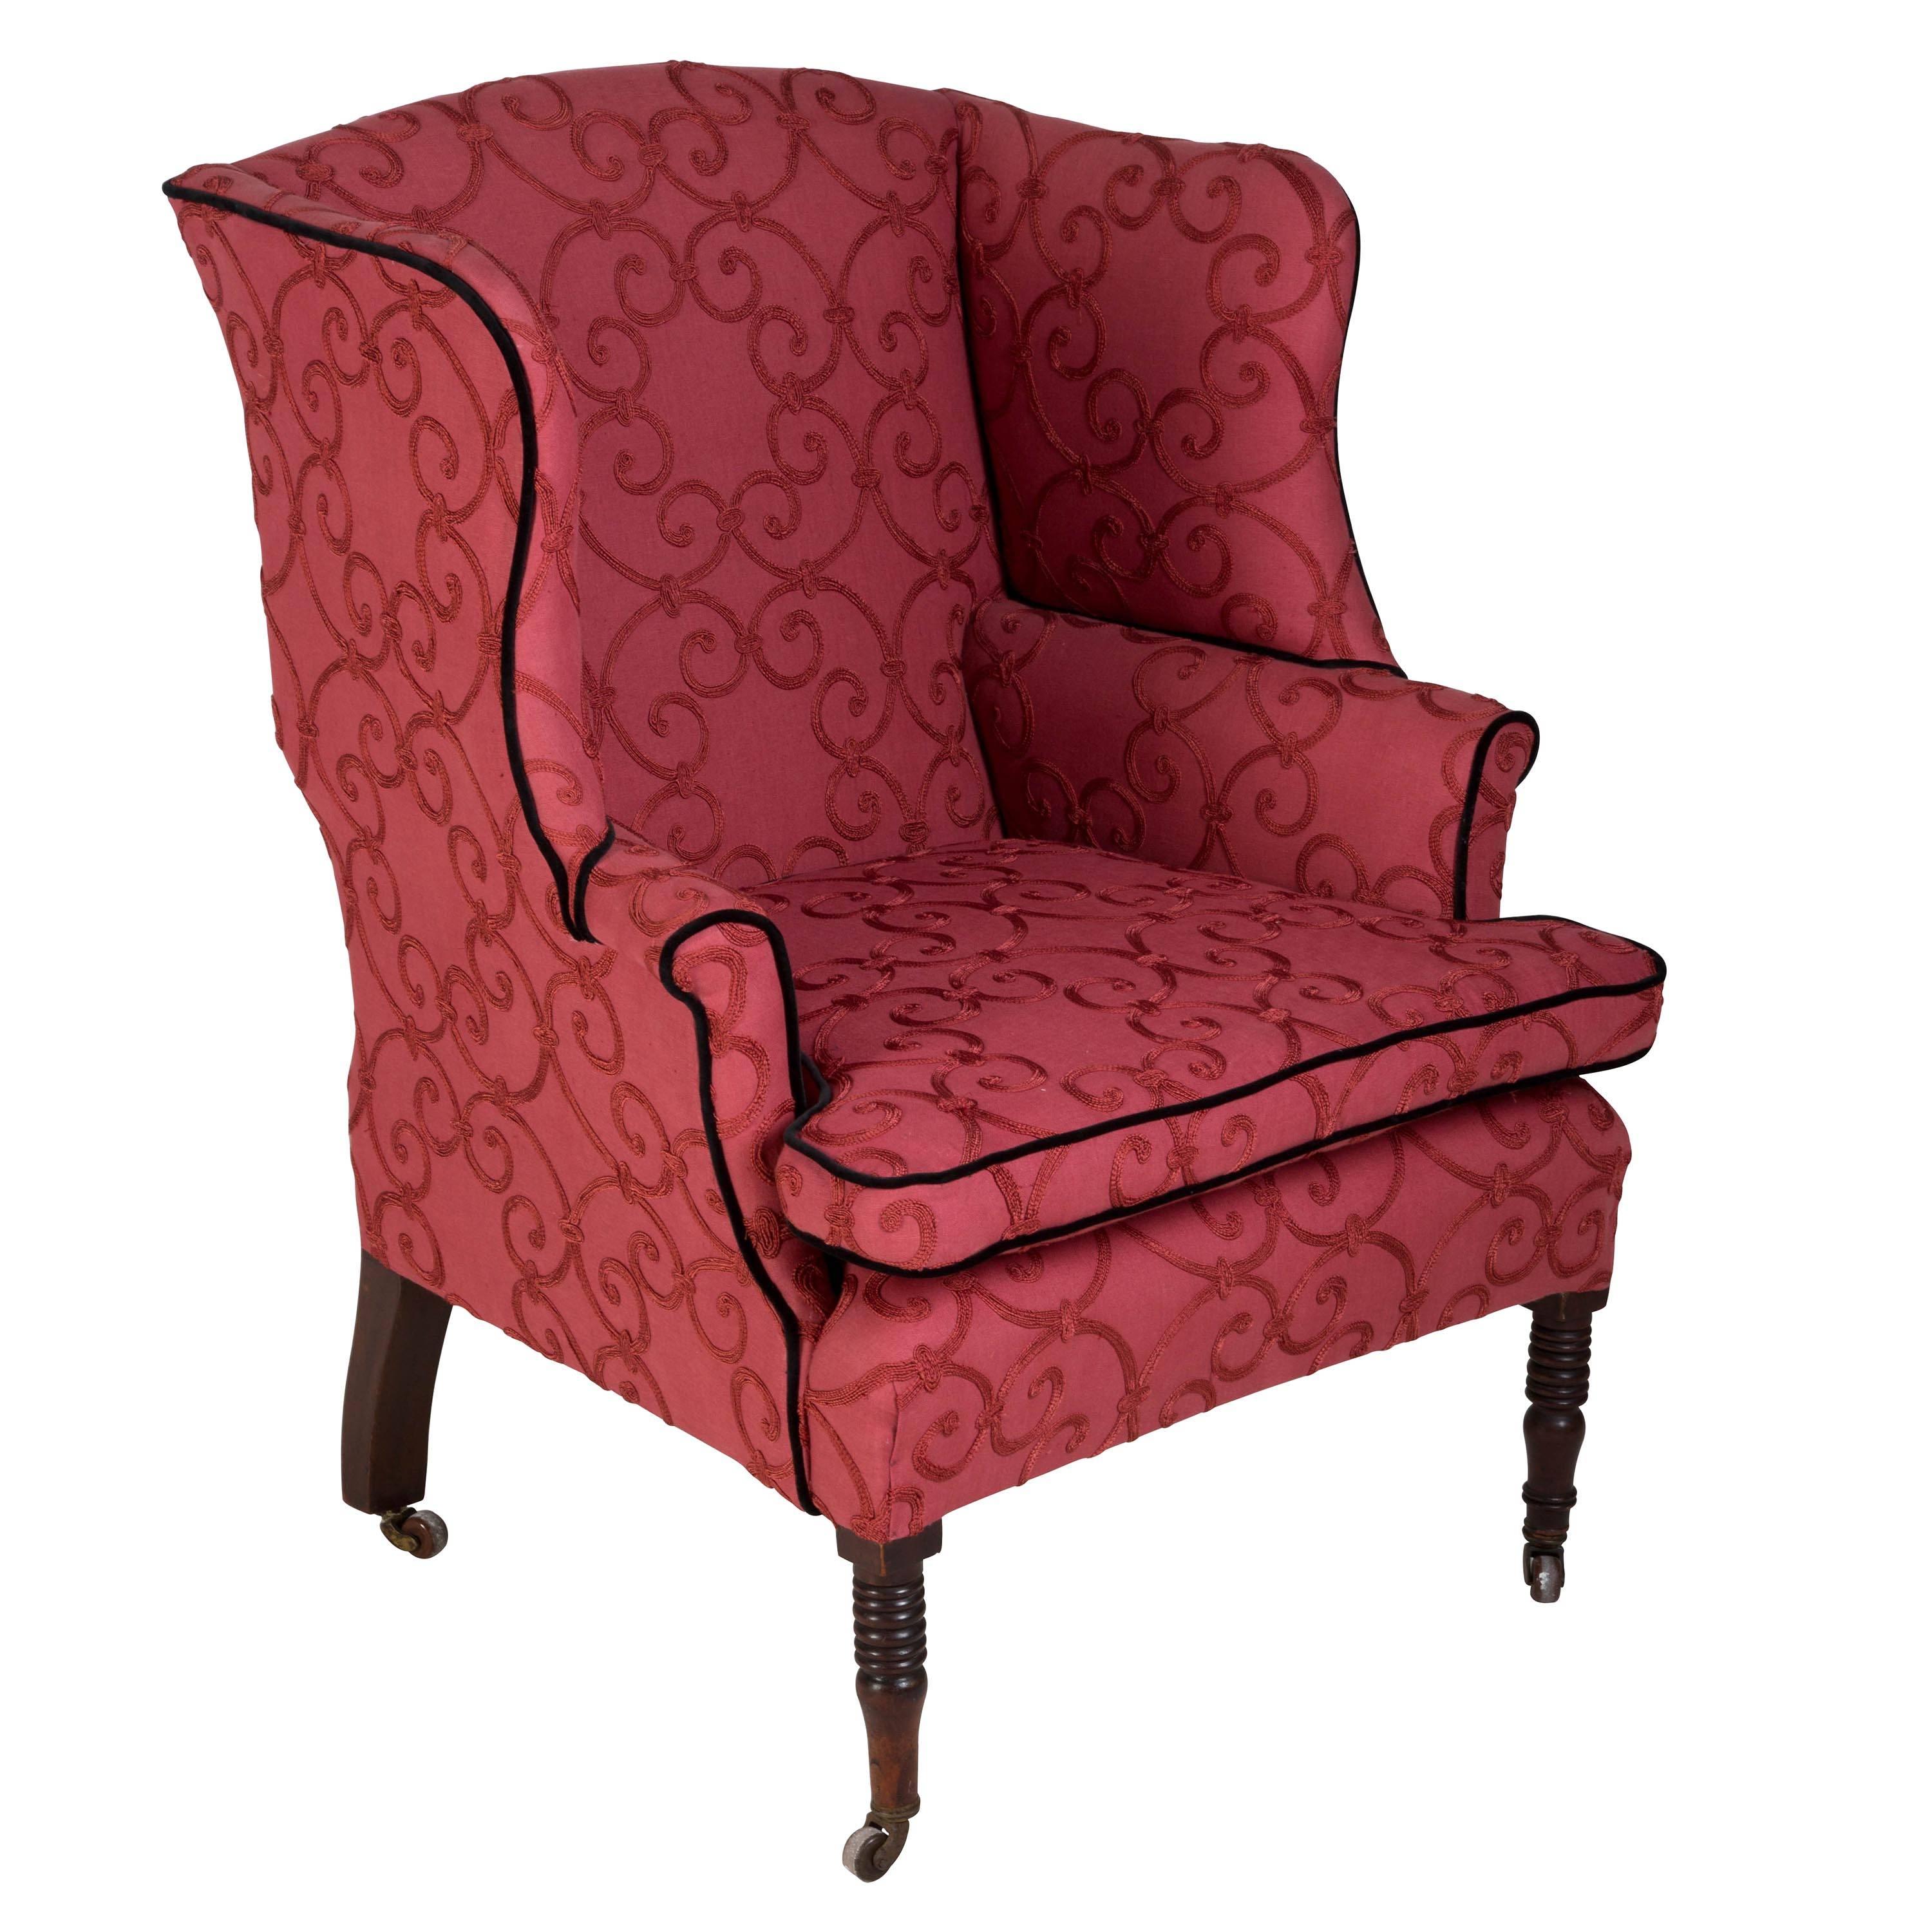 A grand scale English Regency period wing armchair, circa 1820. Seat depth 58cm.